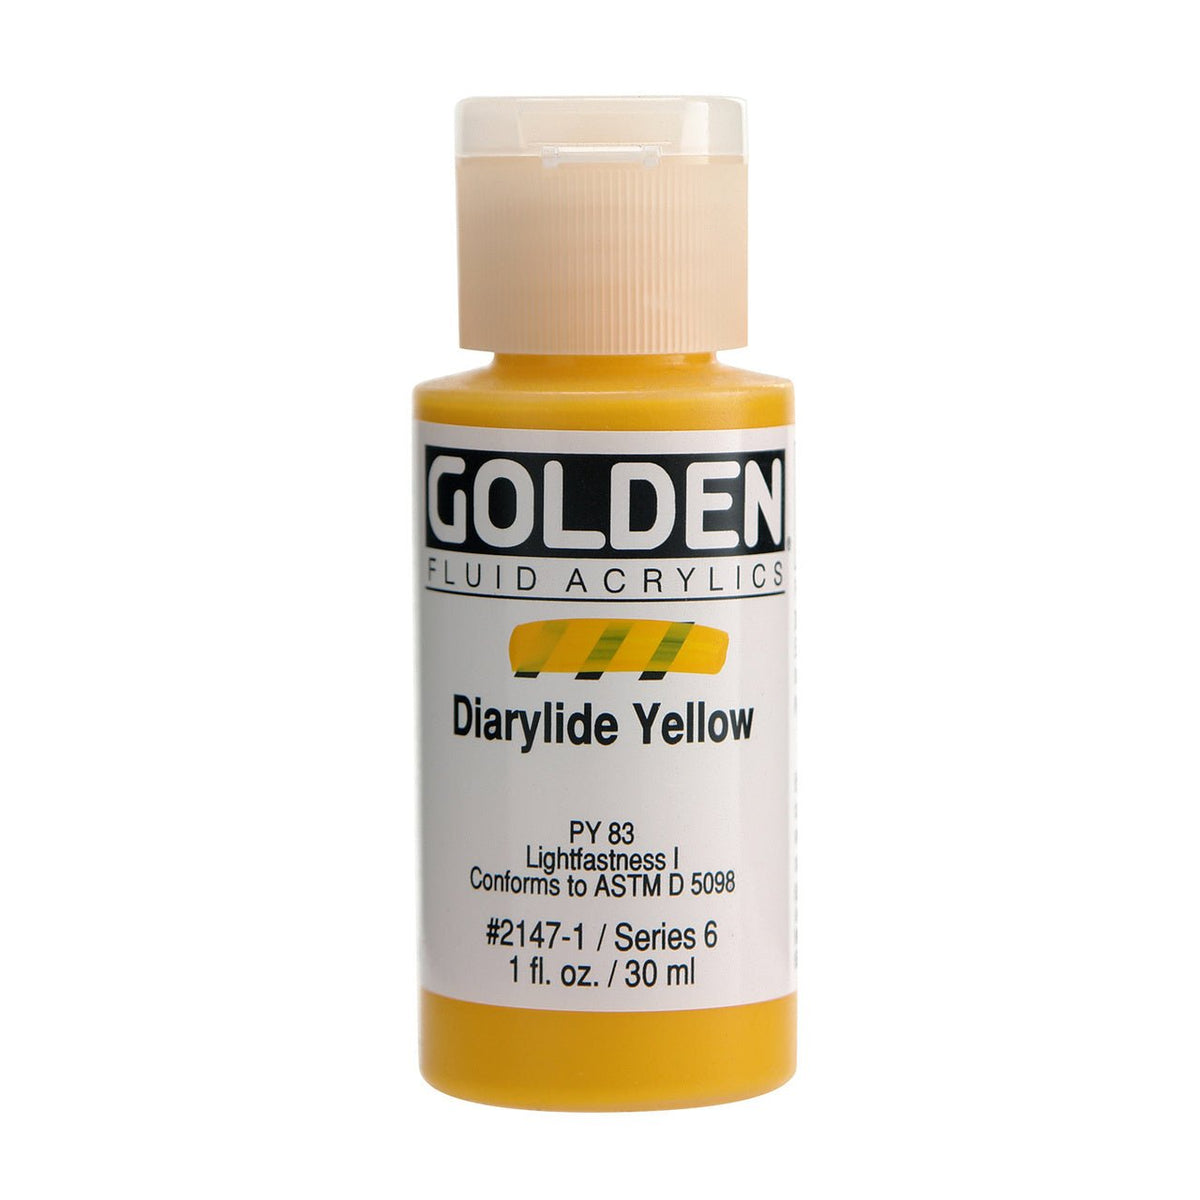 Golden Fluid Acrylic Diarylide Yellow 1 oz - merriartist.com